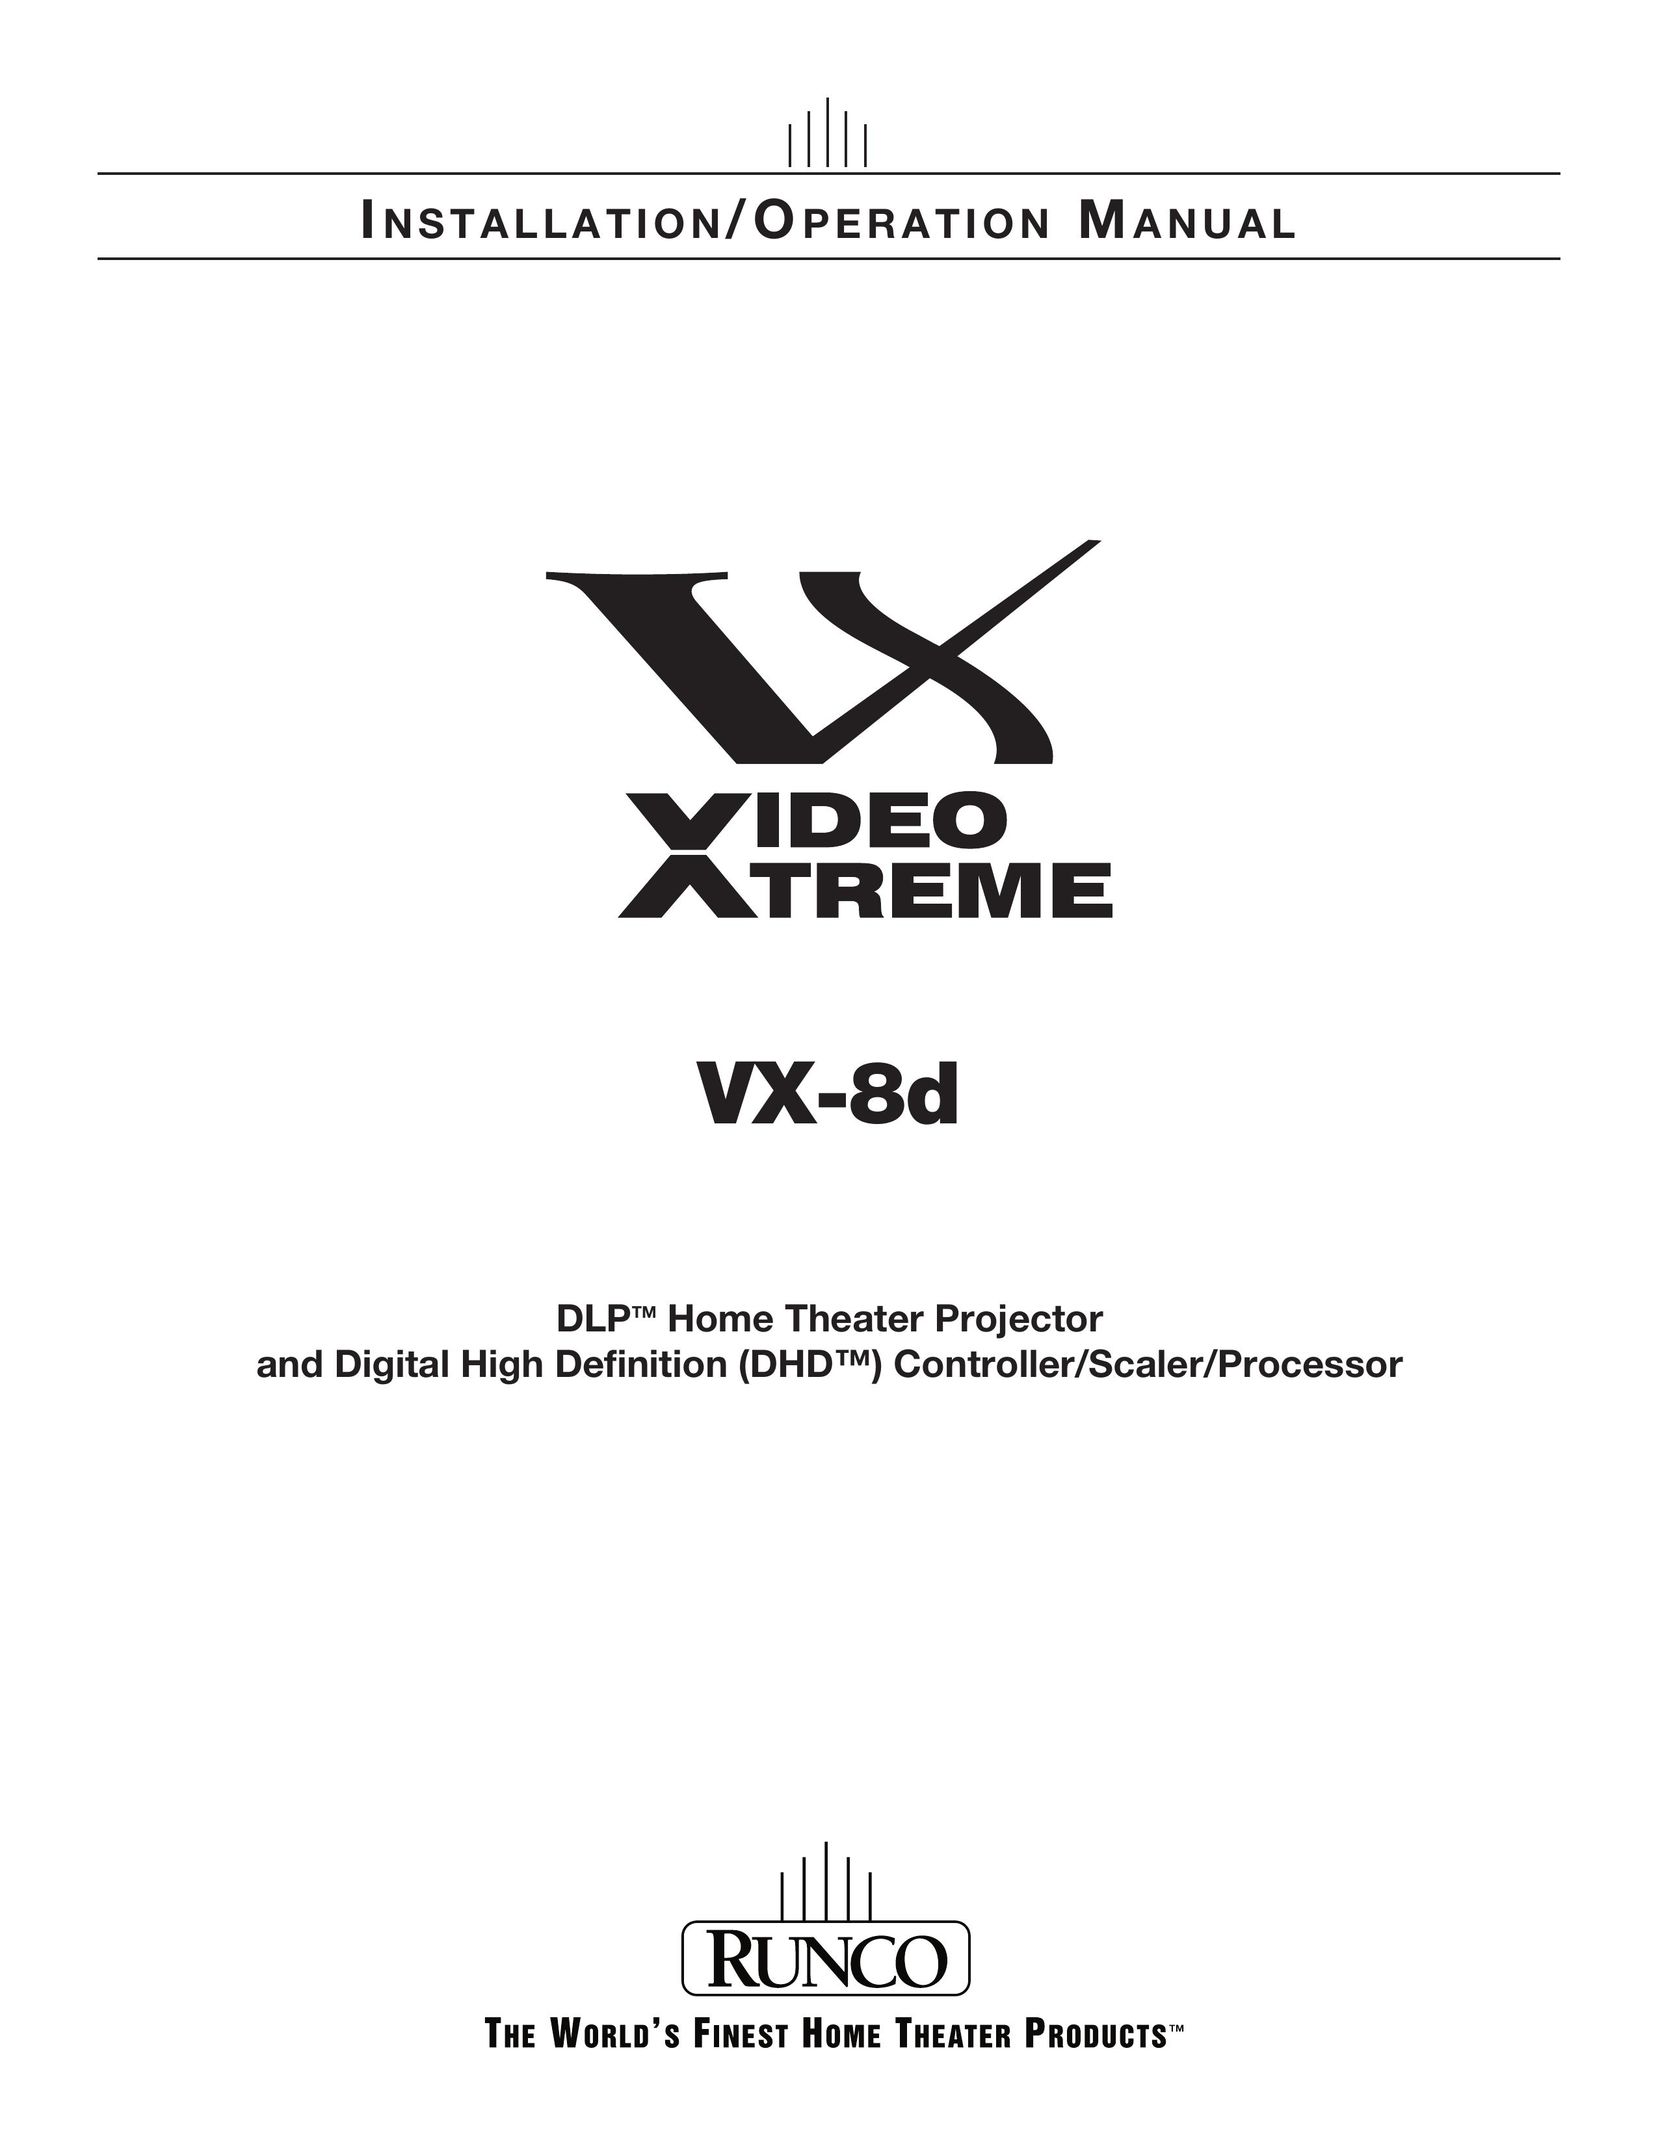 Runco VX-8D Home Theater Screen User Manual